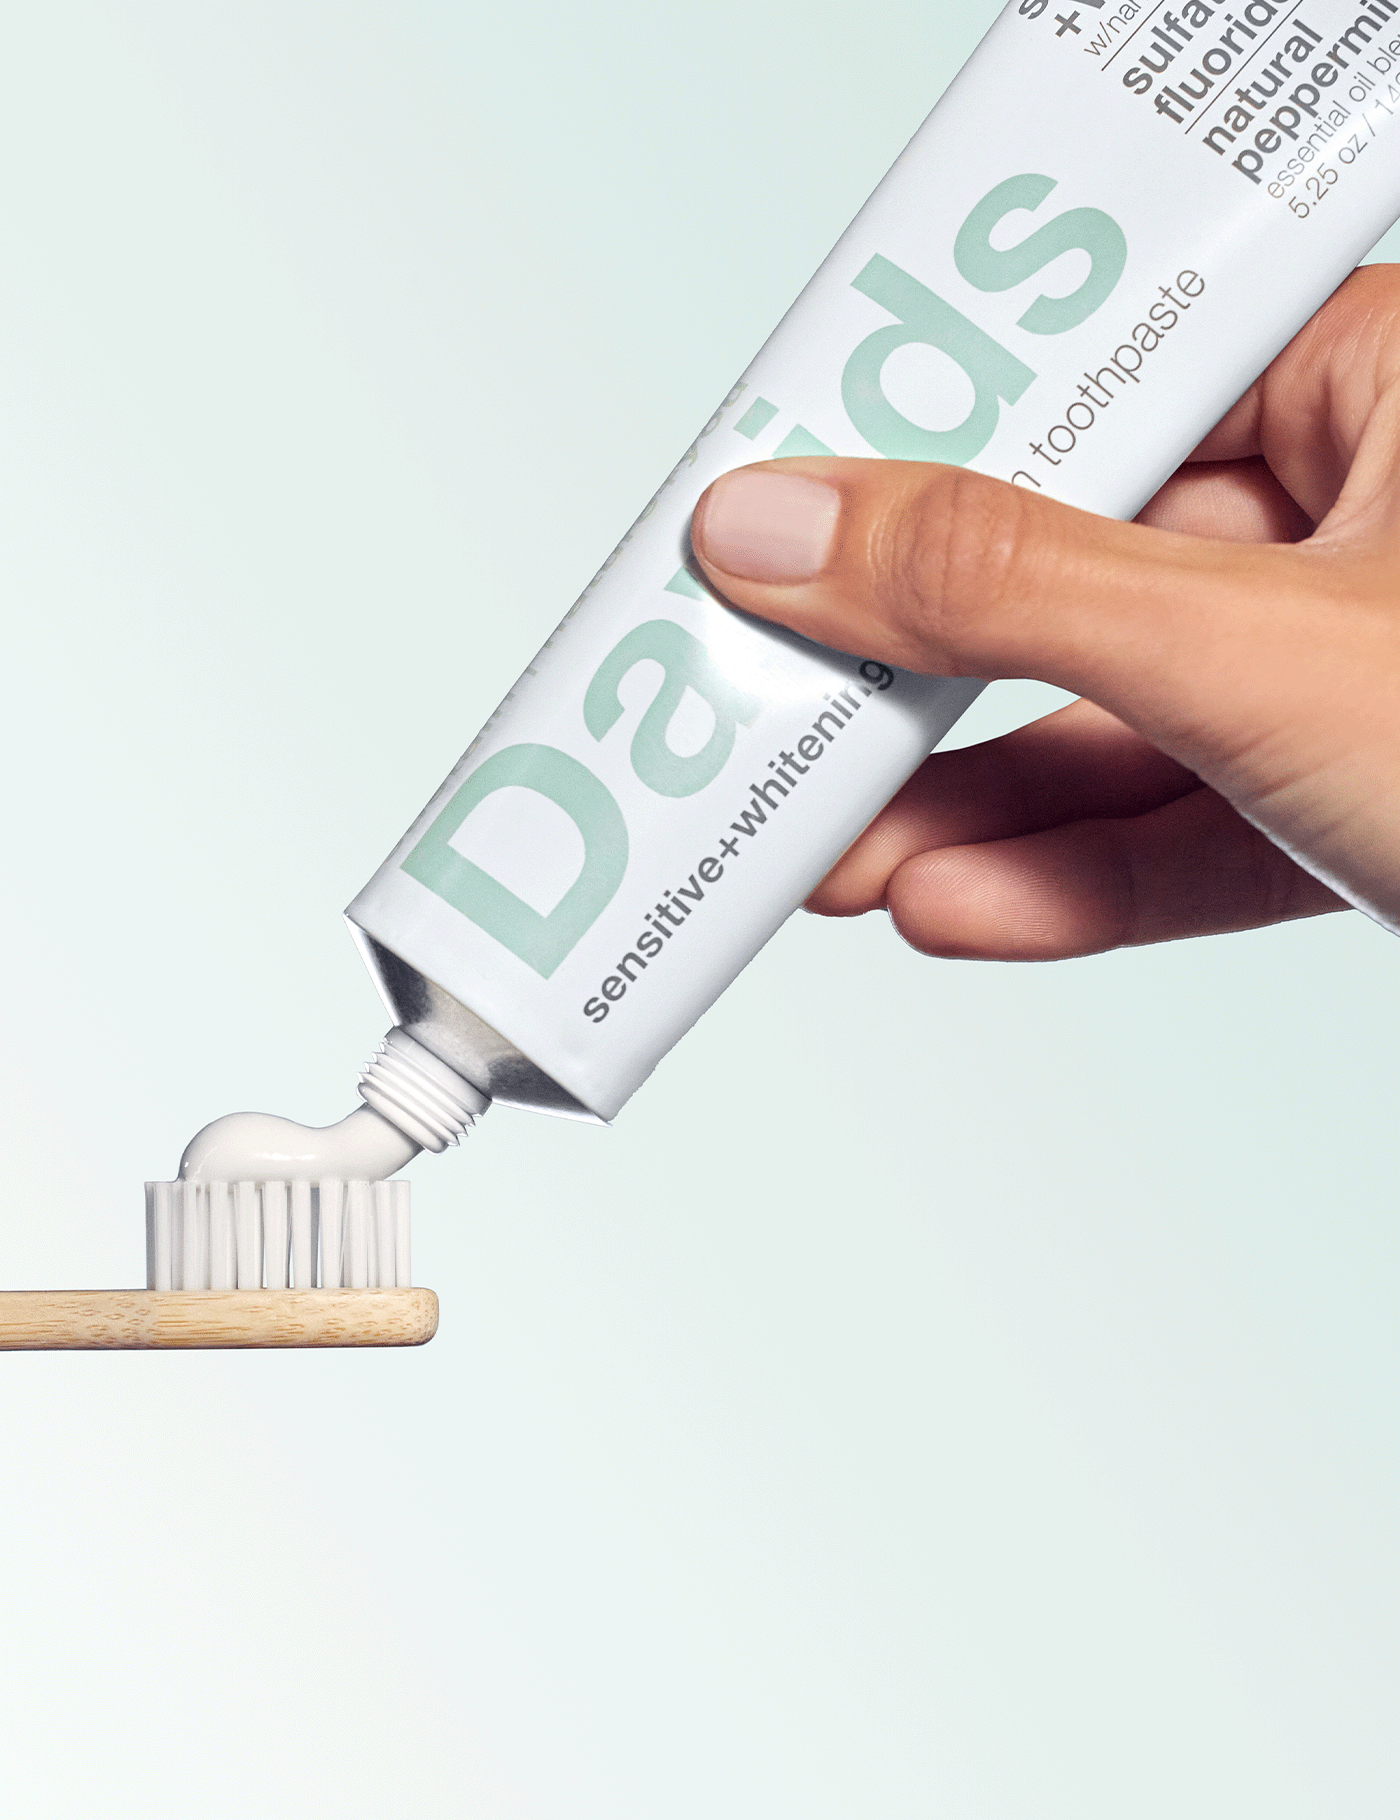 Davids sensitive+whitening nano-hydroxyapatite premium toothpaste / peppermint ***LIMIT QTY 1 DUE TO LOW SUPPLY***